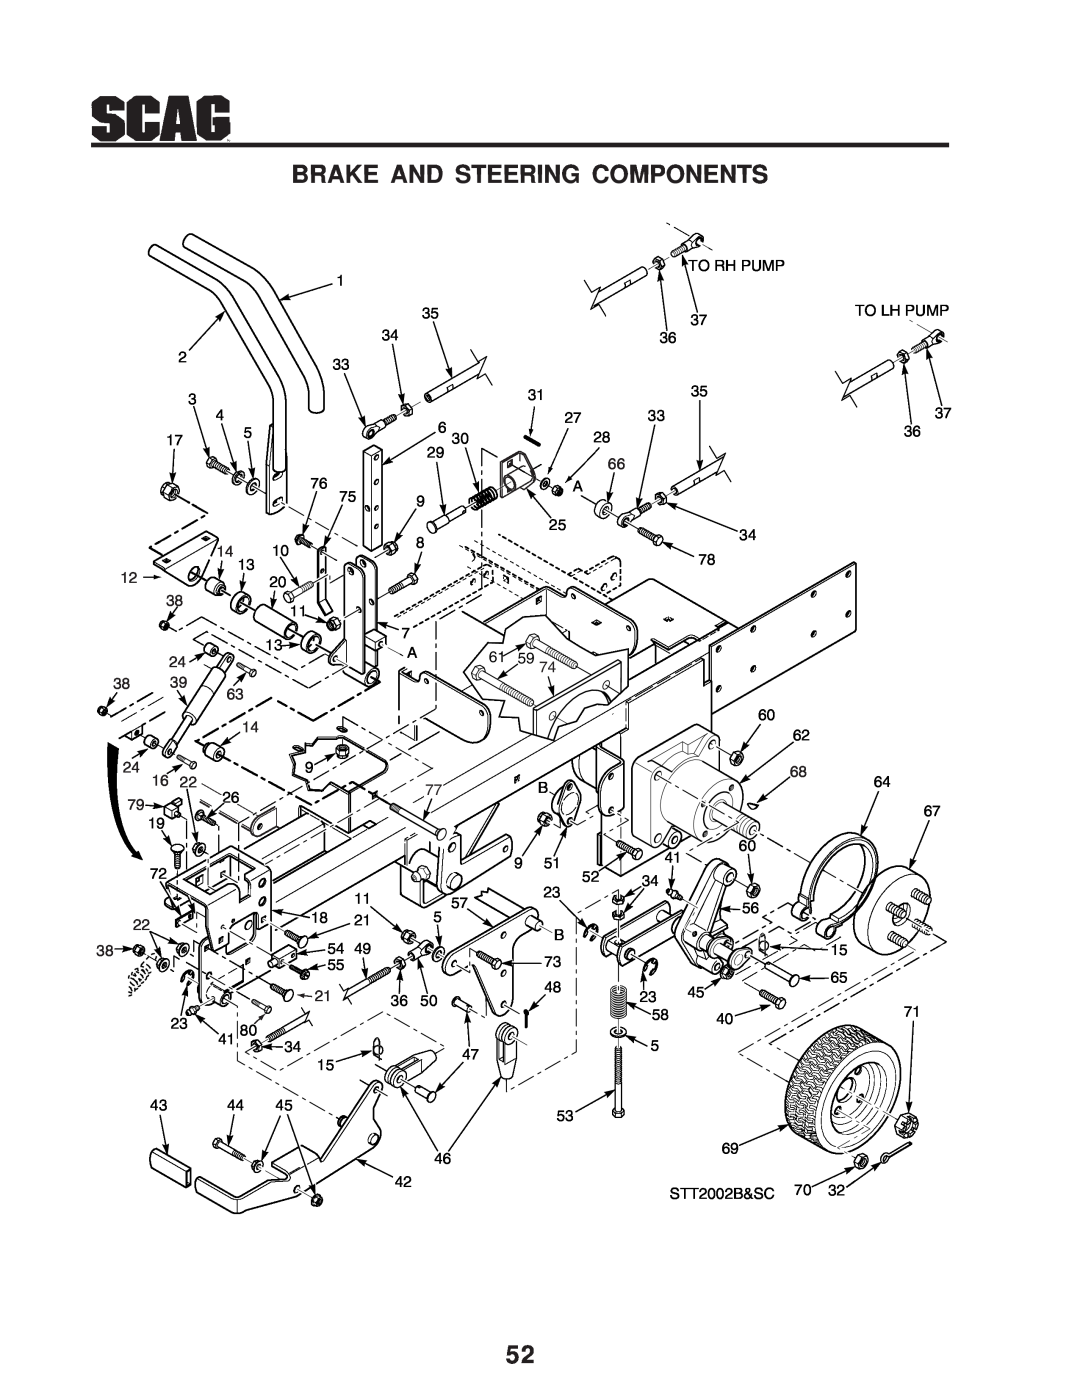 Scag Power Equipment STT-31BSD manual Brake And Steering Components, To Rh Pump, 3135 27, To Lh Pump, STT2002B&SC 70 